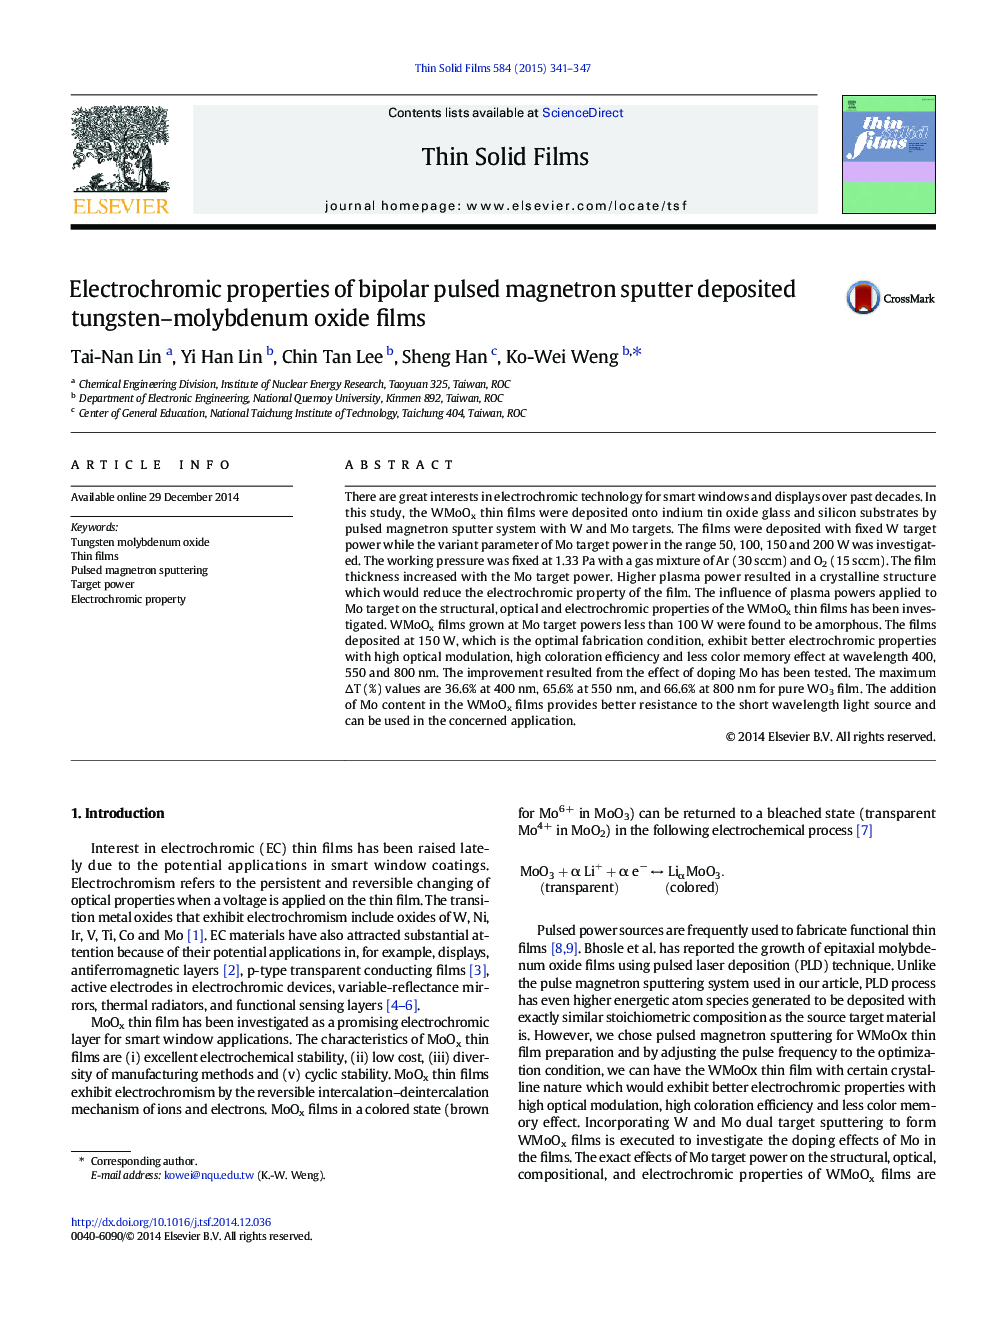 Electrochromic properties of bipolar pulsed magnetron sputter deposited tungsten–molybdenum oxide films